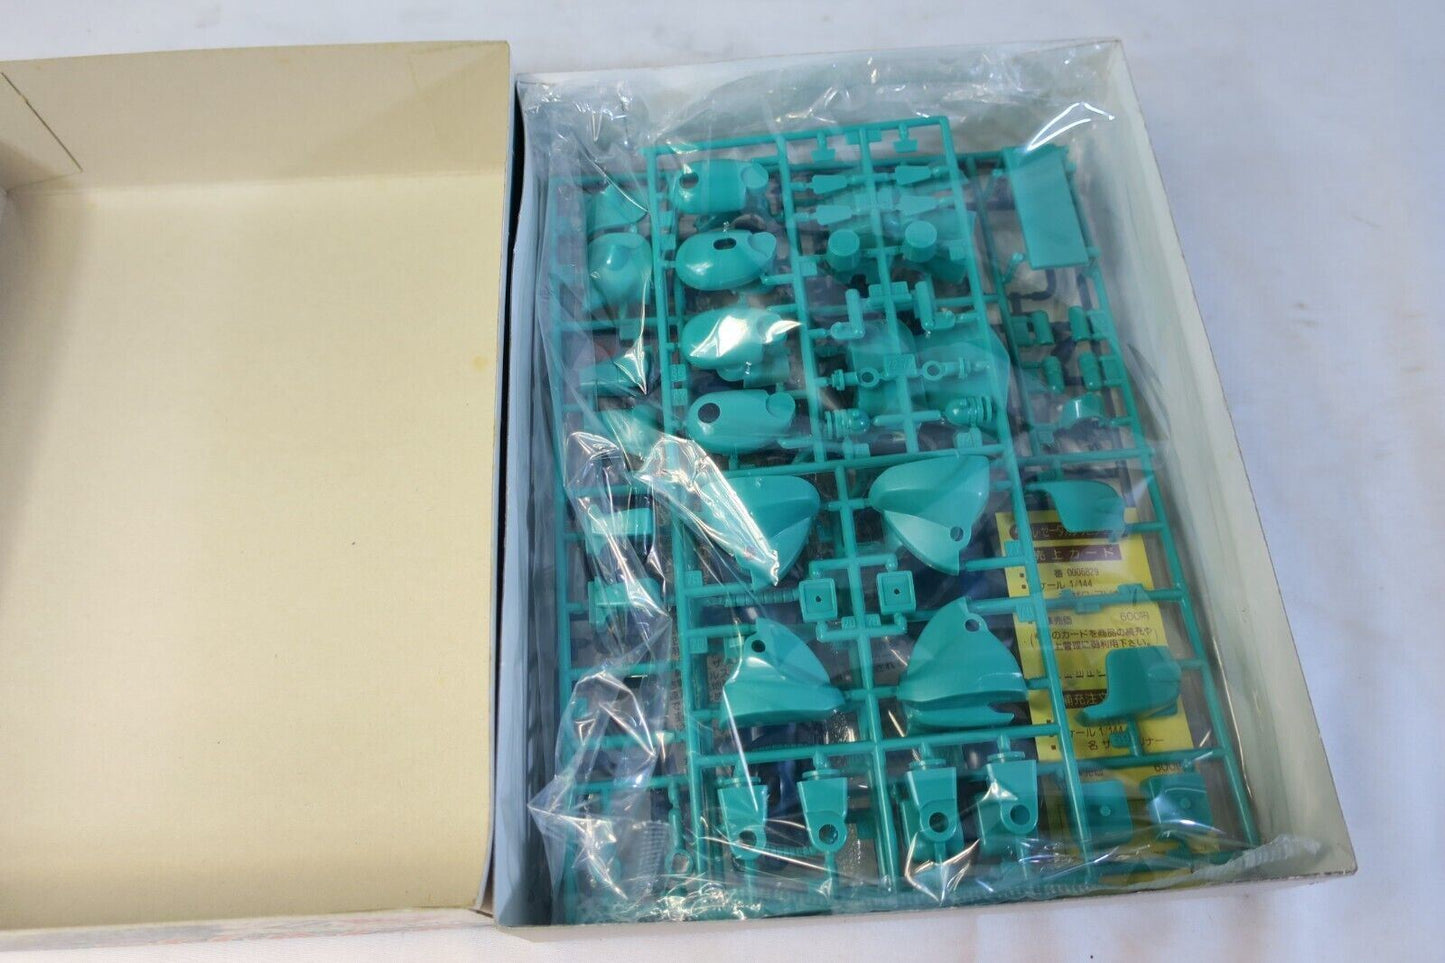 Bandai ZZ Gundam 1/144 Zaku-Mariner Model Kit No. 12